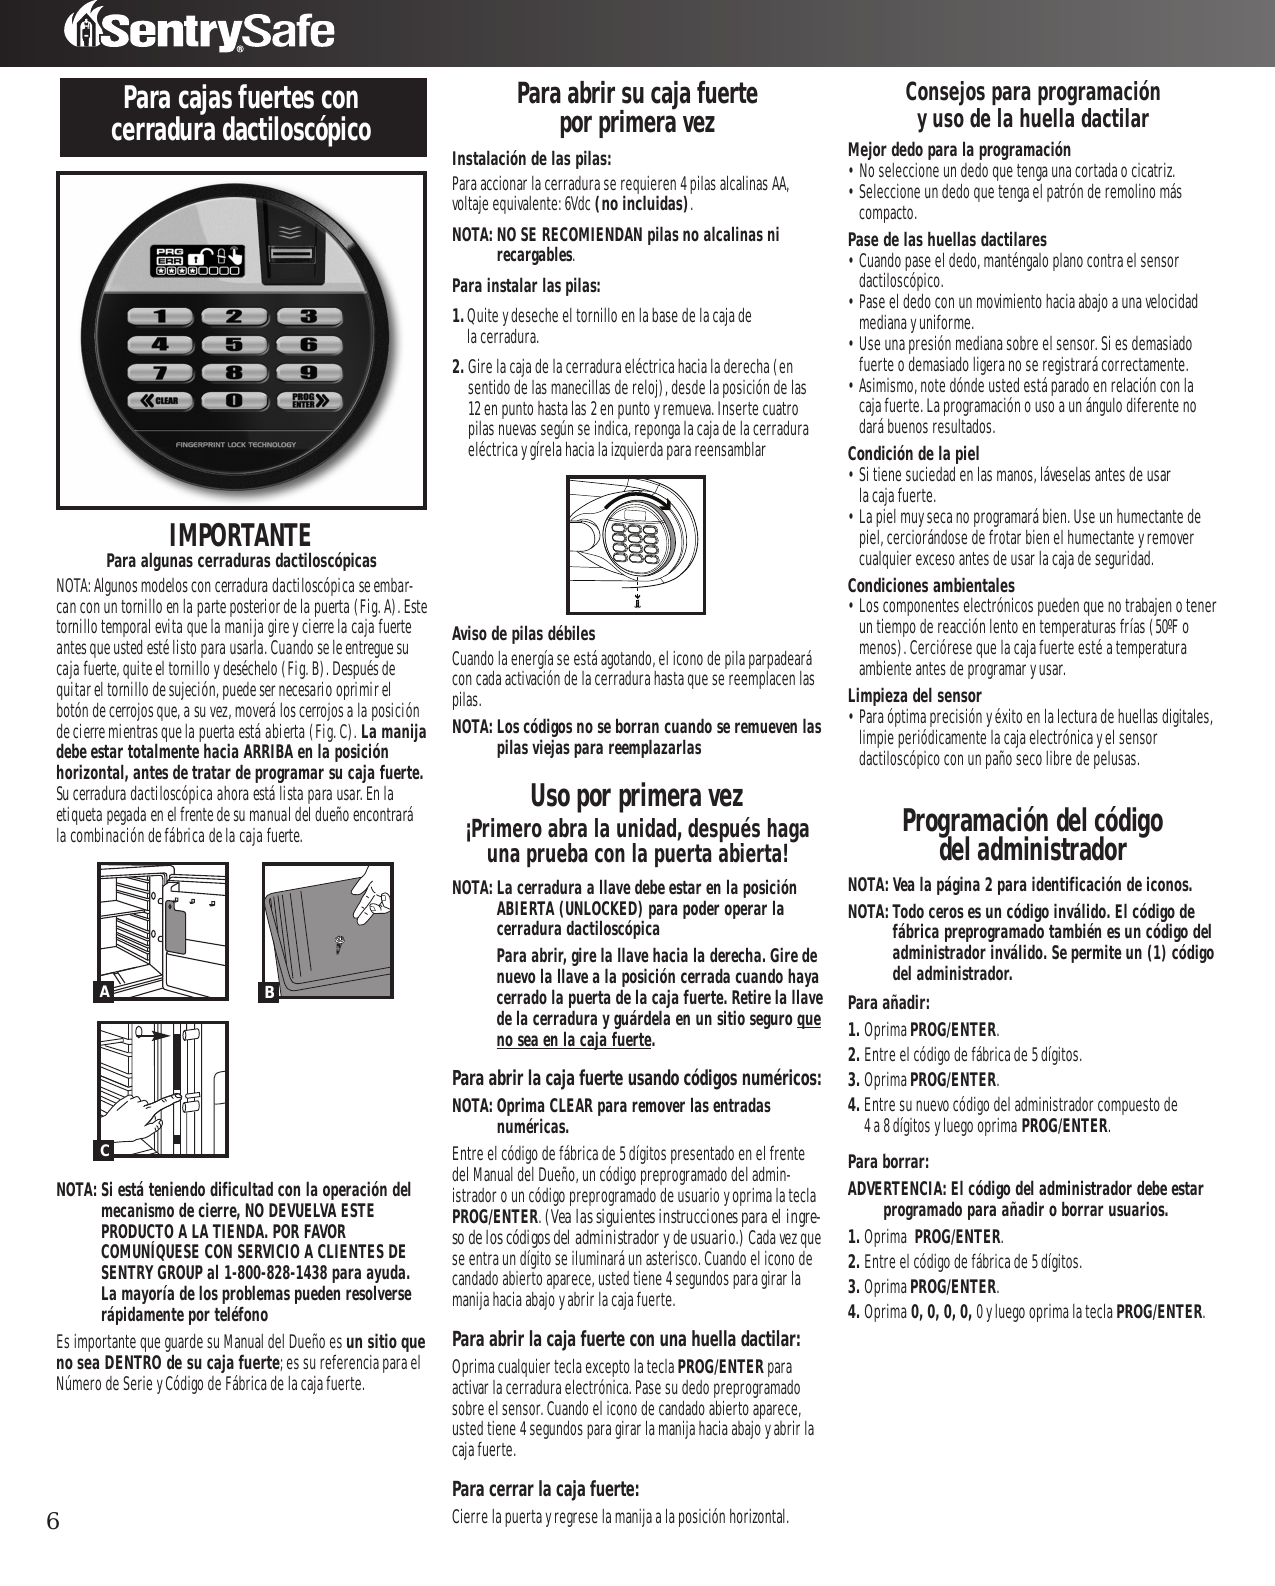 Page 6 of 8 - 077-3799 M01 ComSafe OMRev 1195-manual